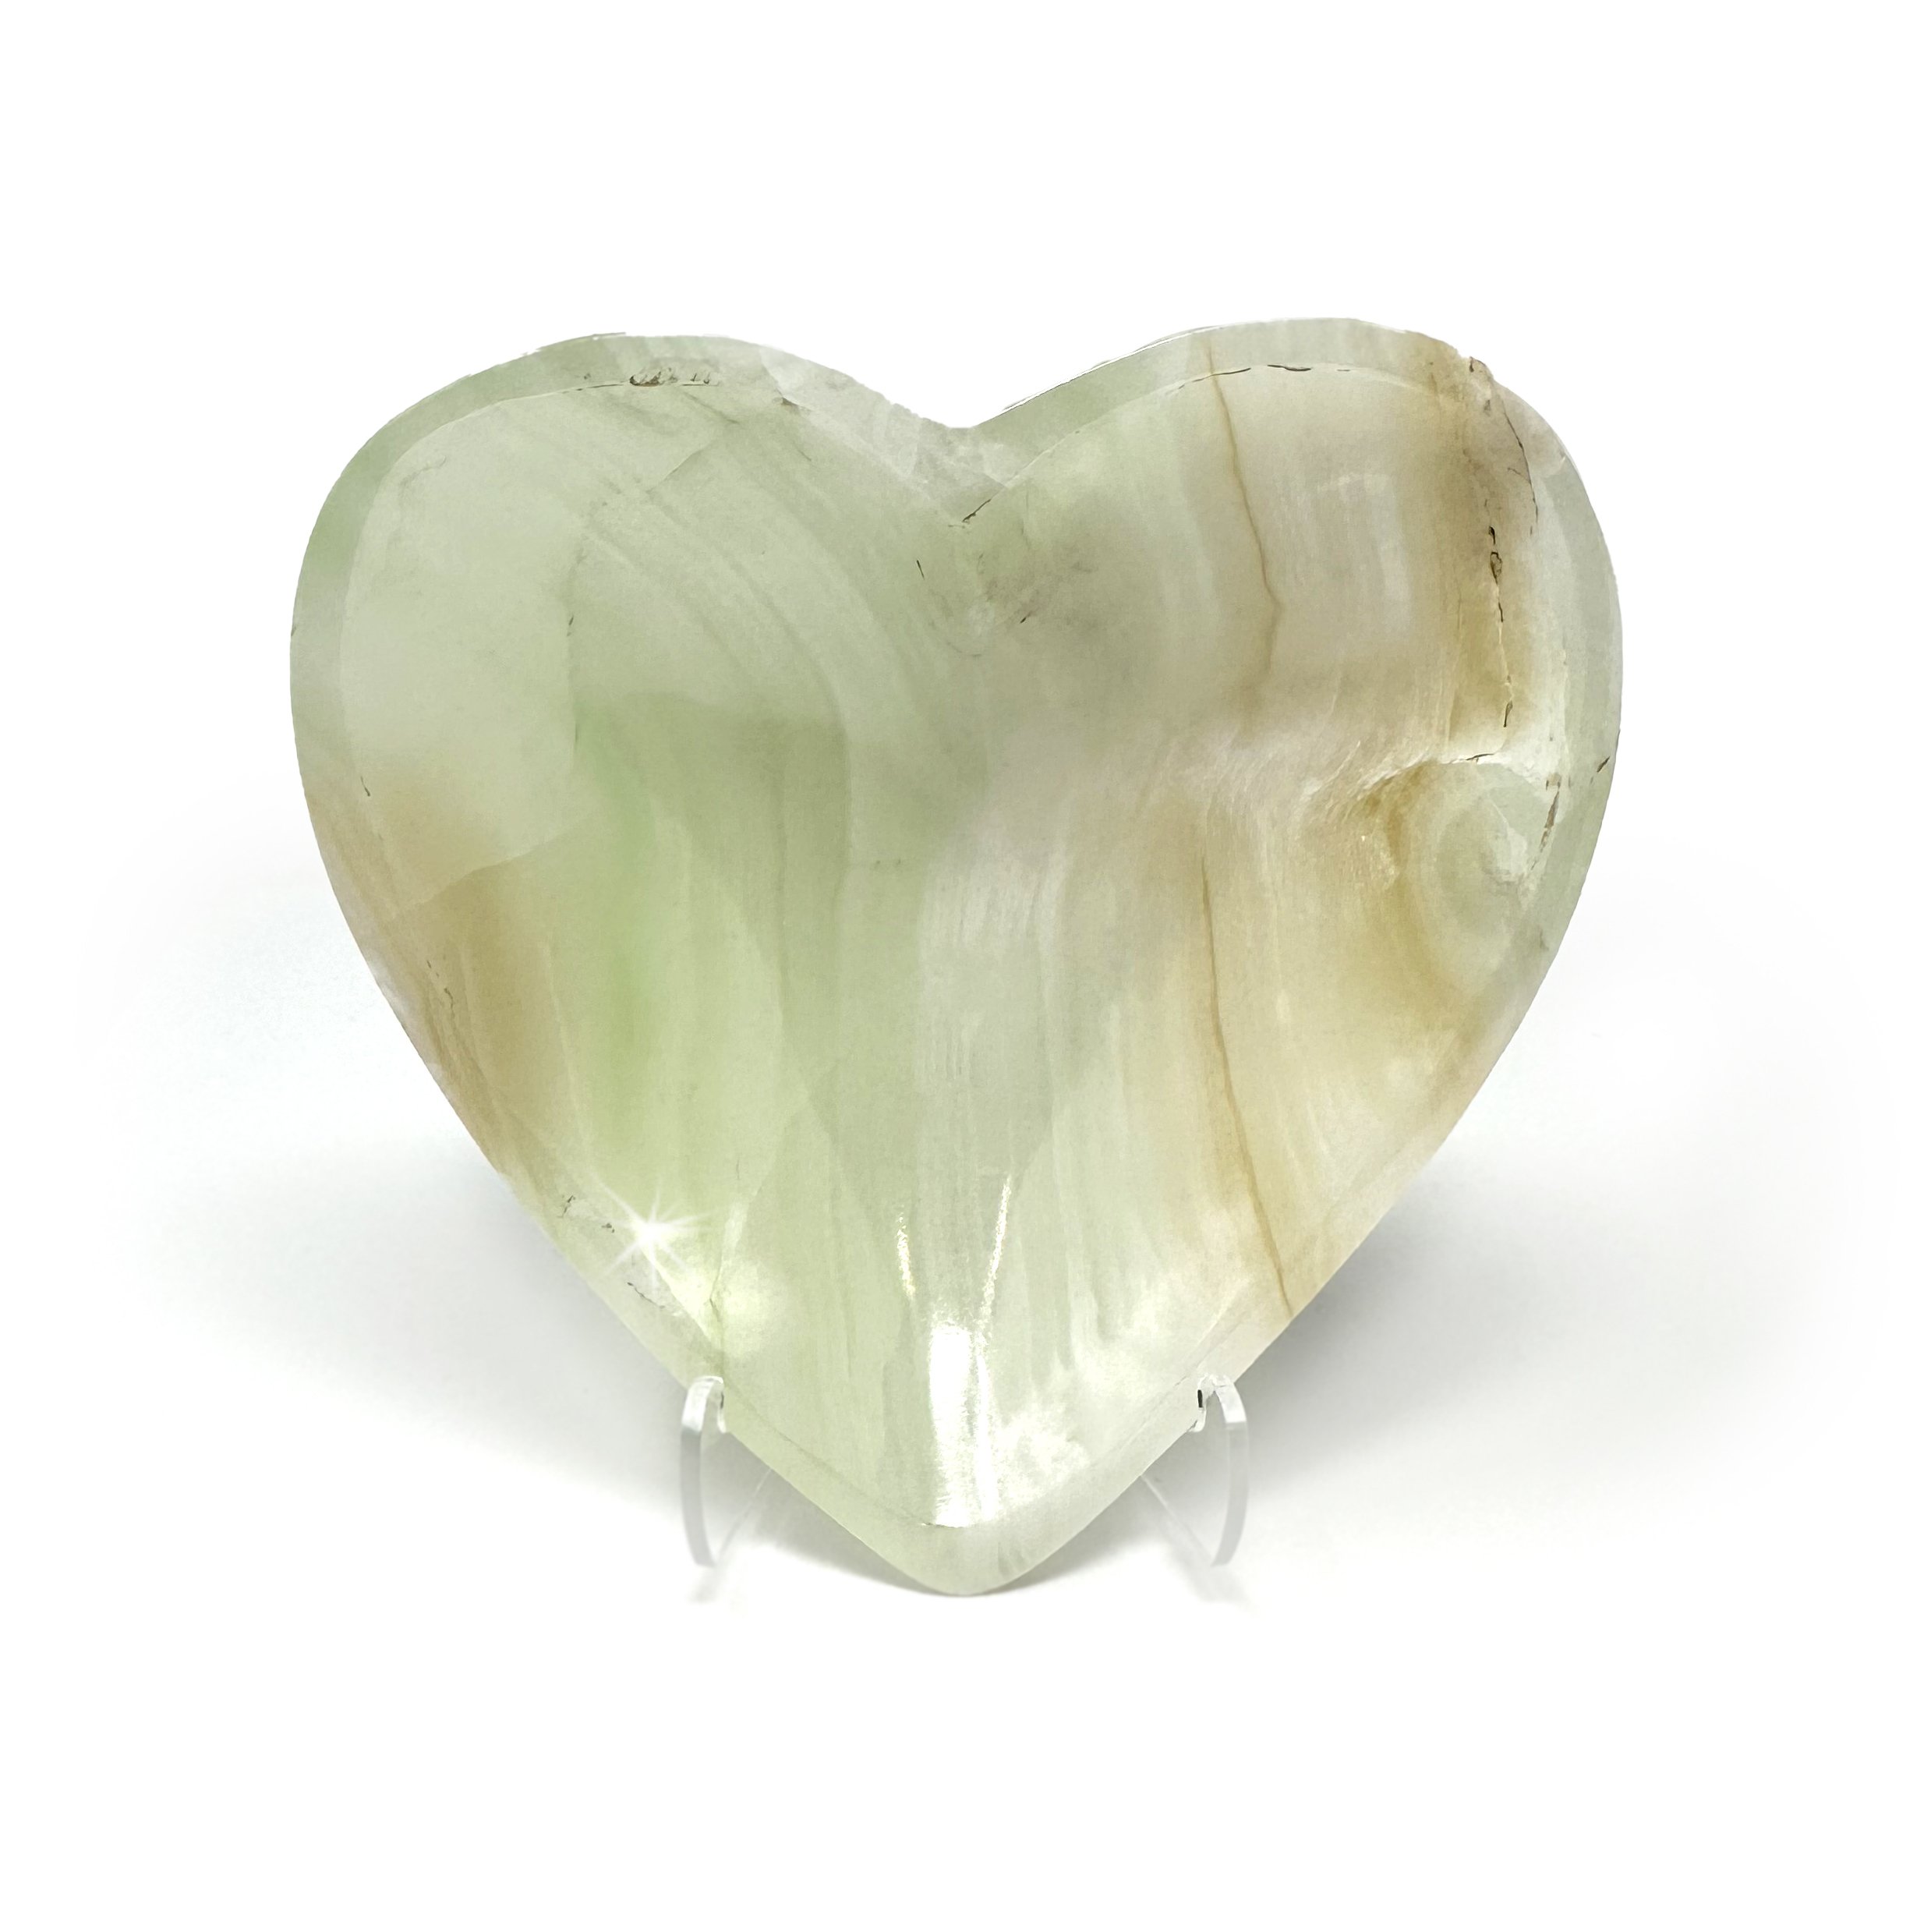 Green Pearlescent Onyx Heart Vessel